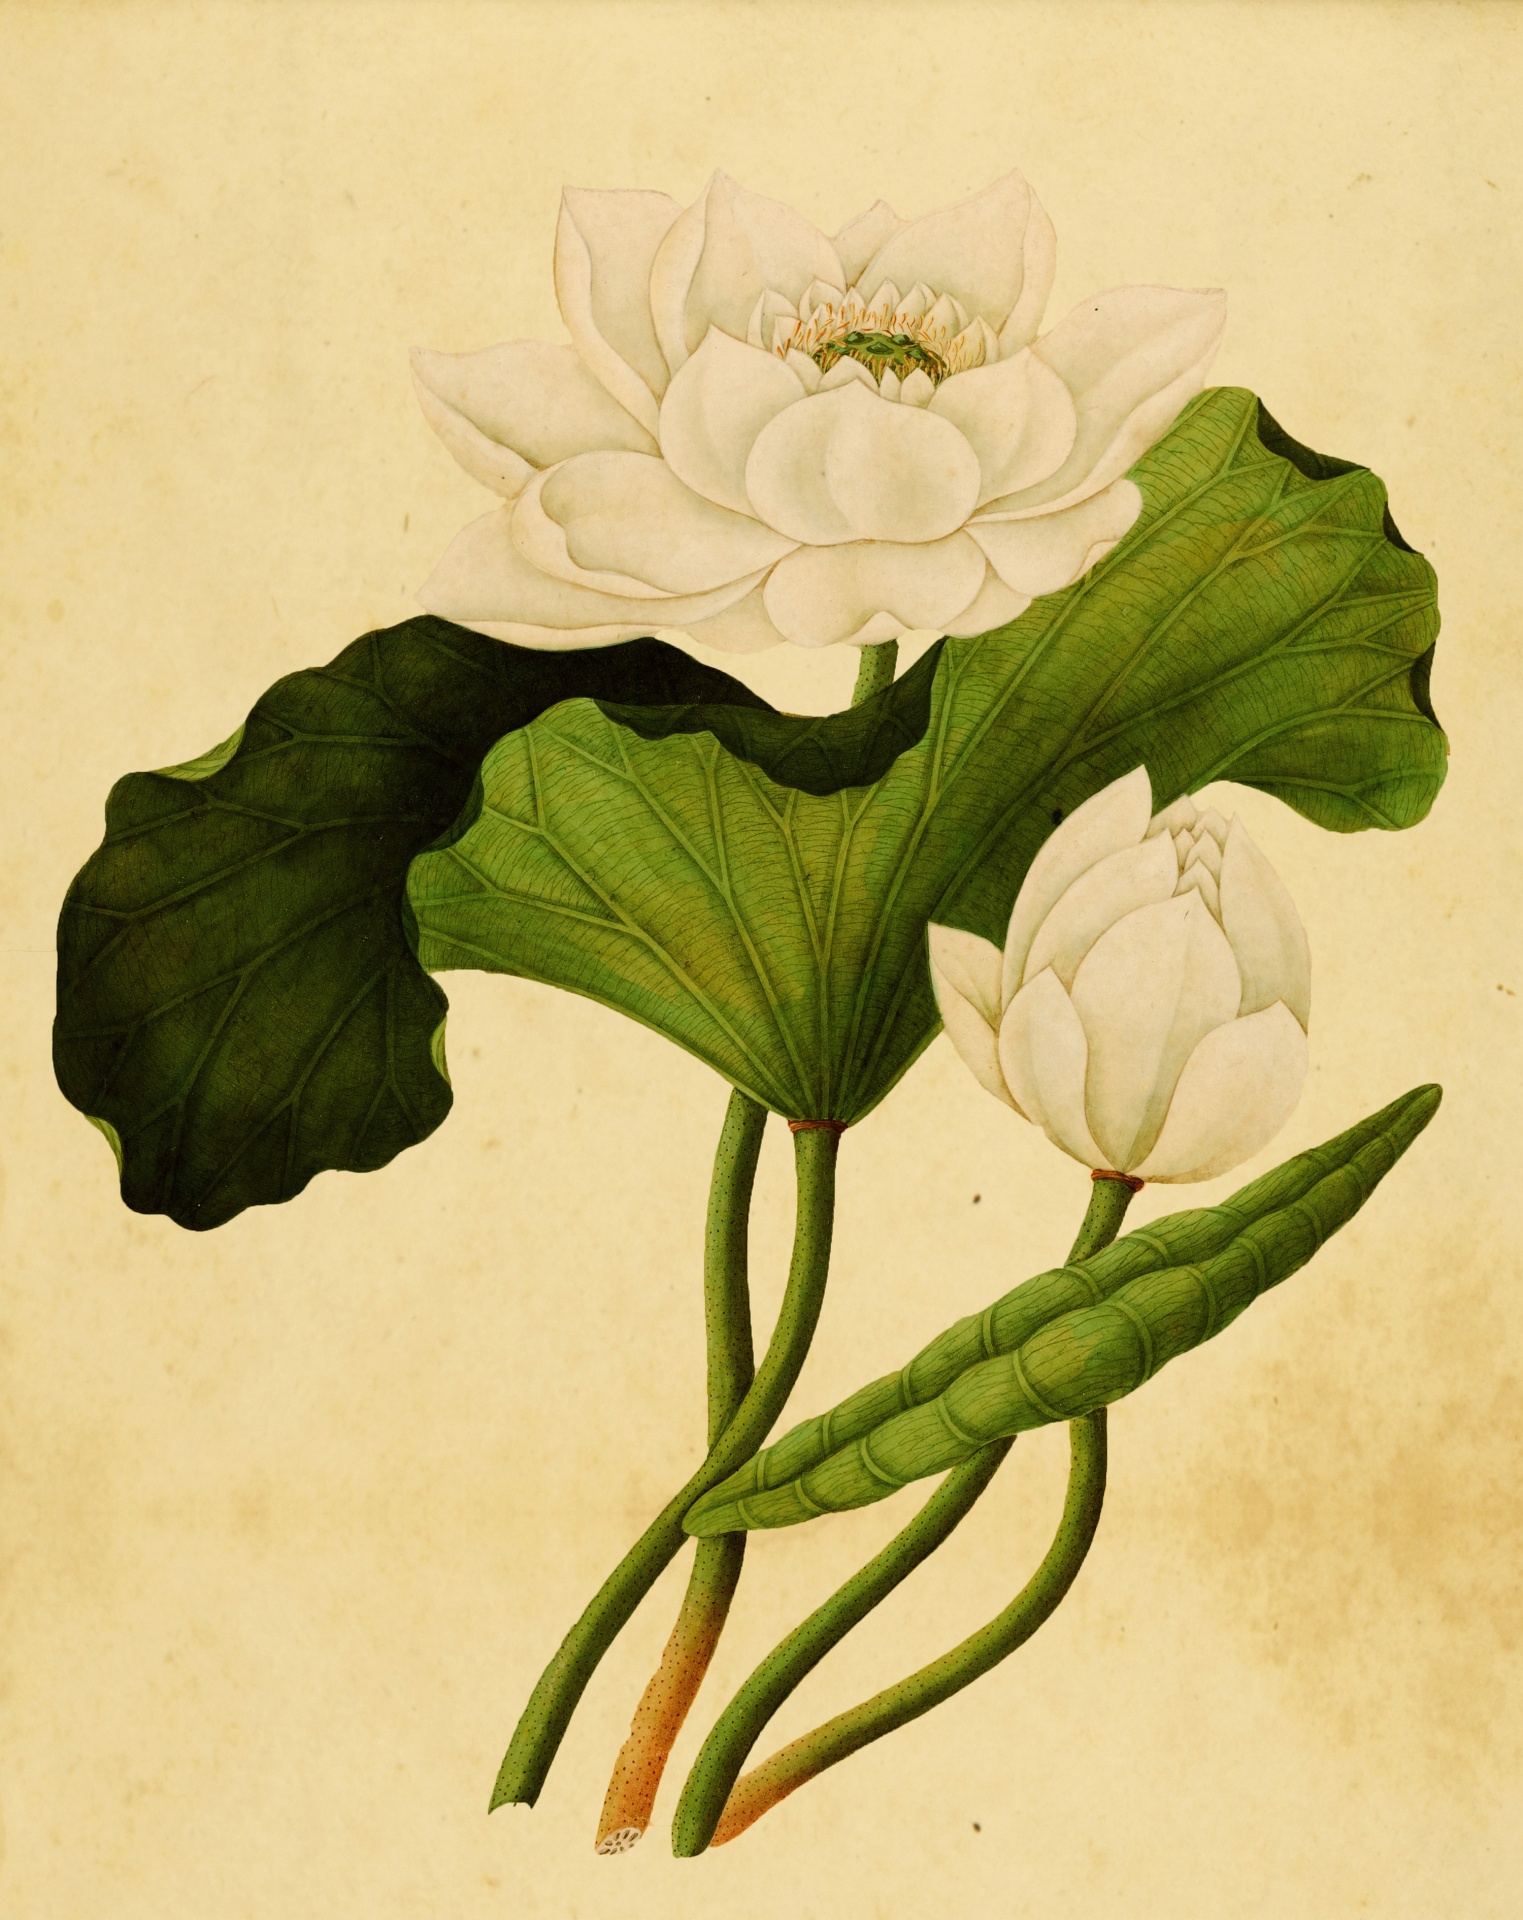 Lotus flower, sacred lotus, east indian lotus vintage, antique paper background art print, poster